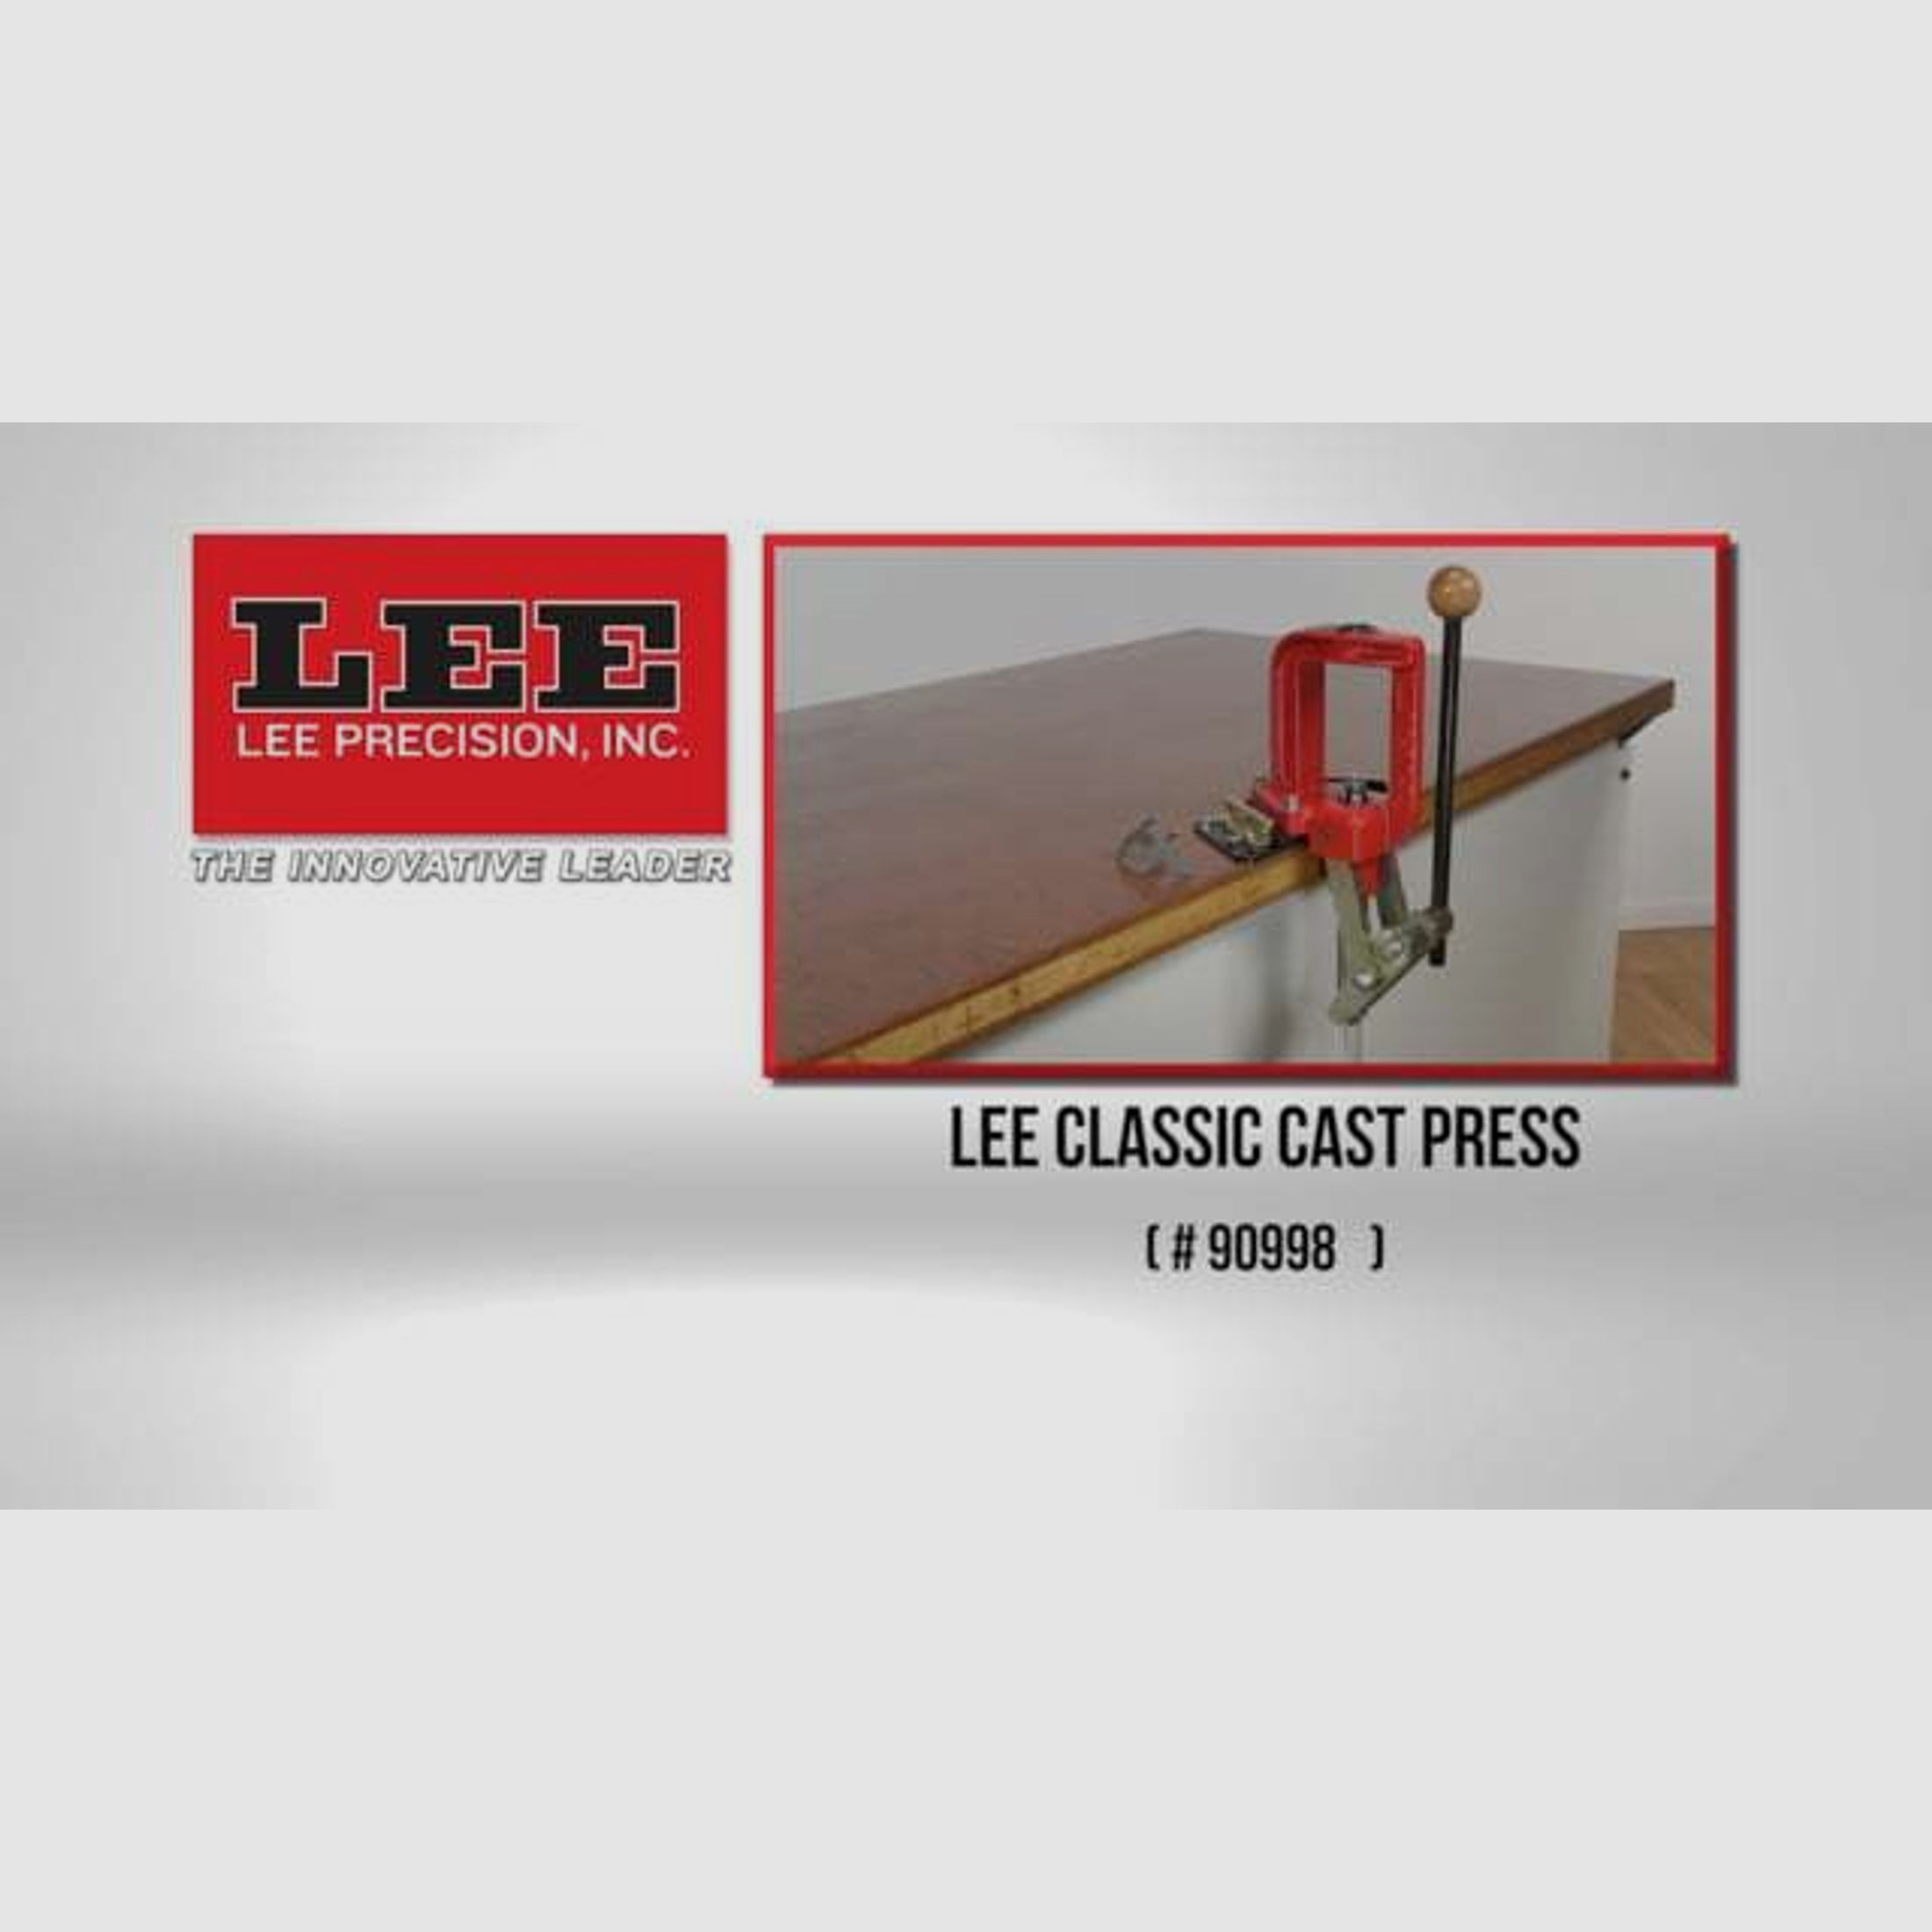 LEE CLASSIC CAST PRESS